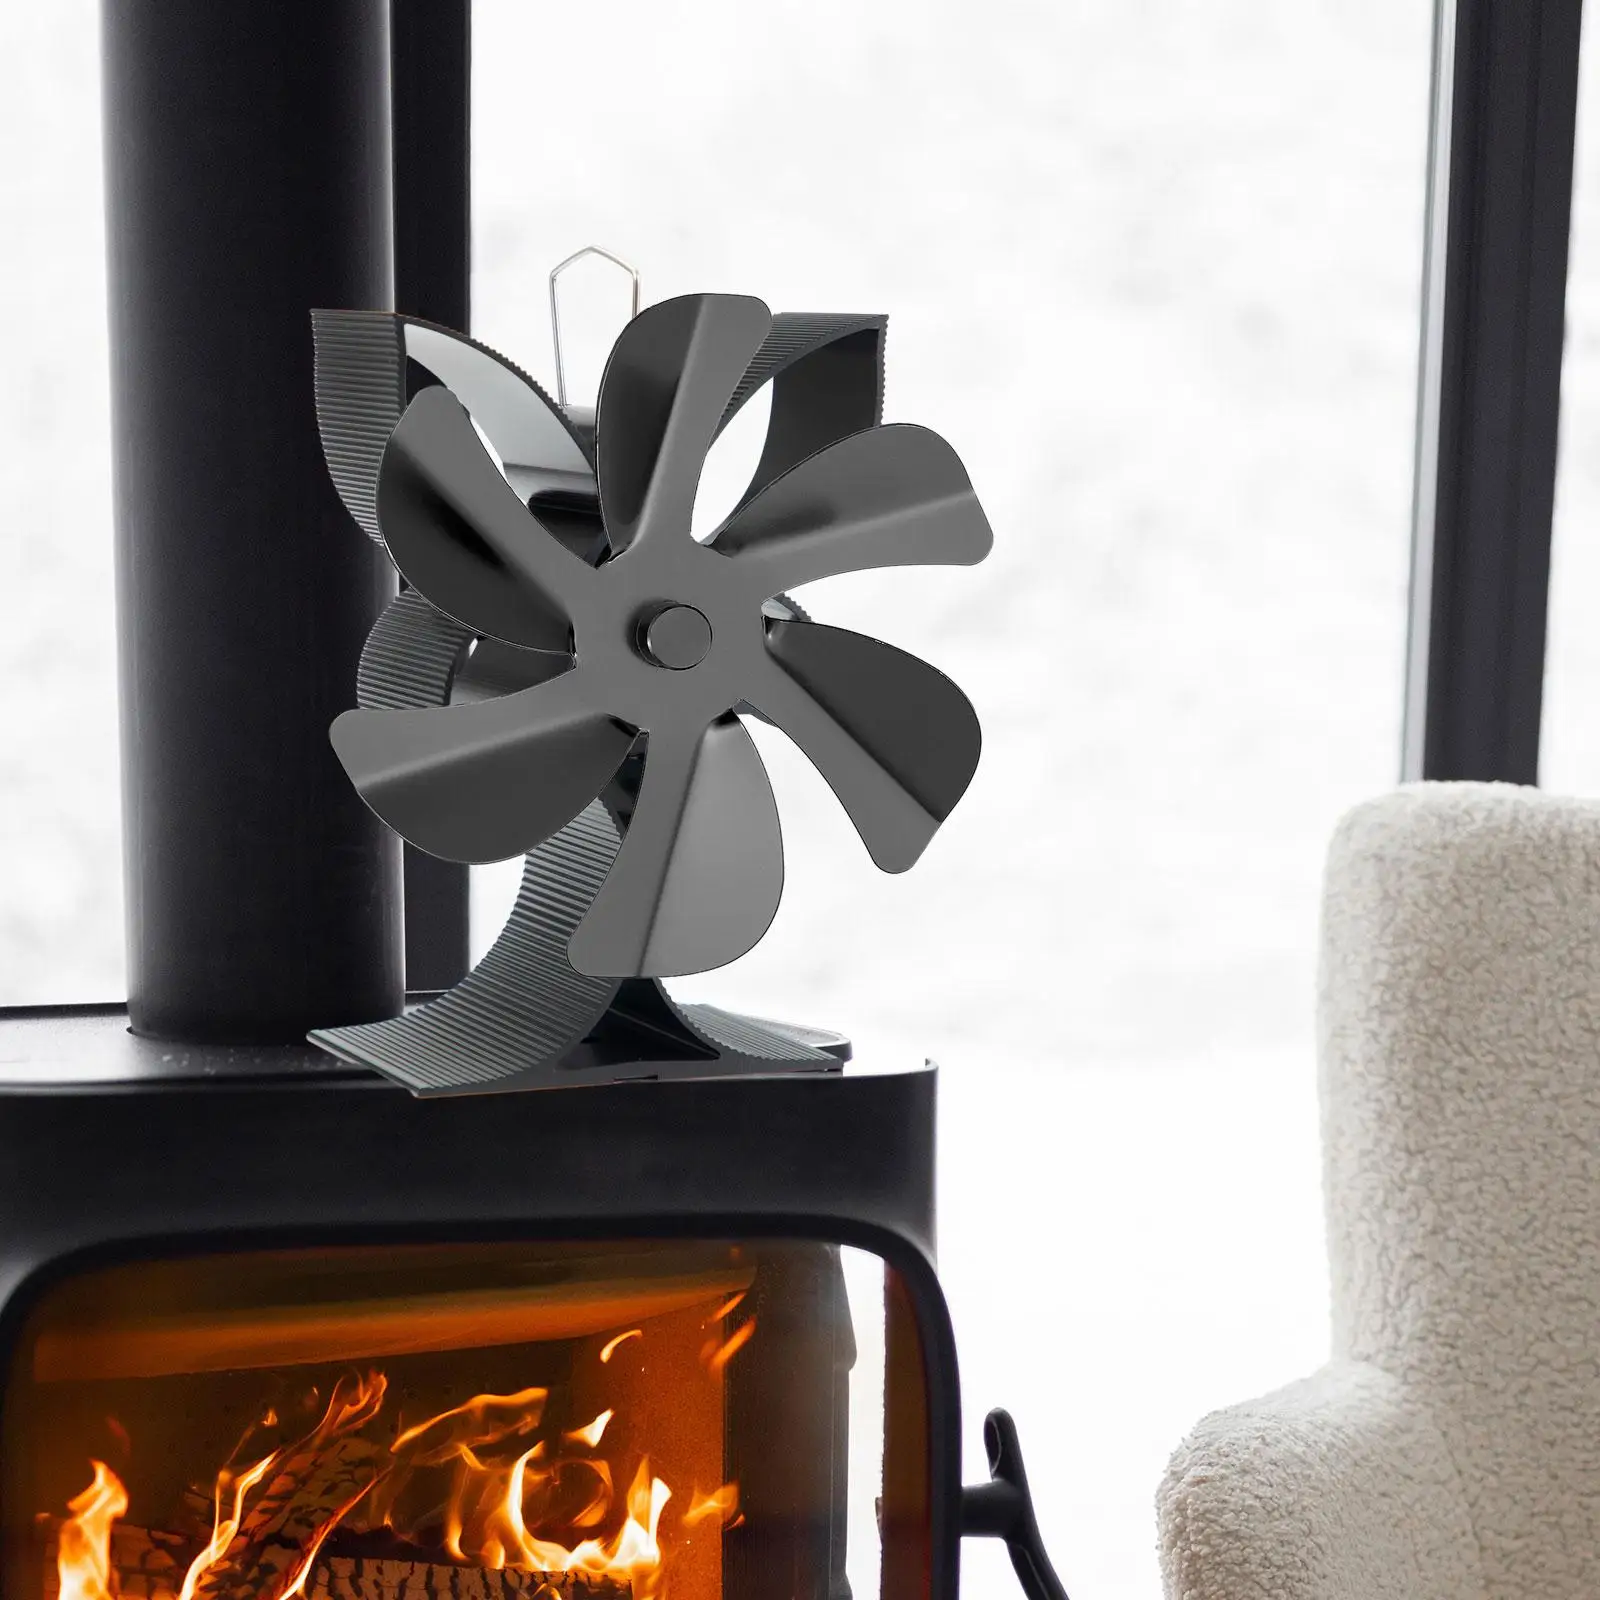 Xmas Logs Burner Heat Powered Fireplace Fan Multifunctional Black Color